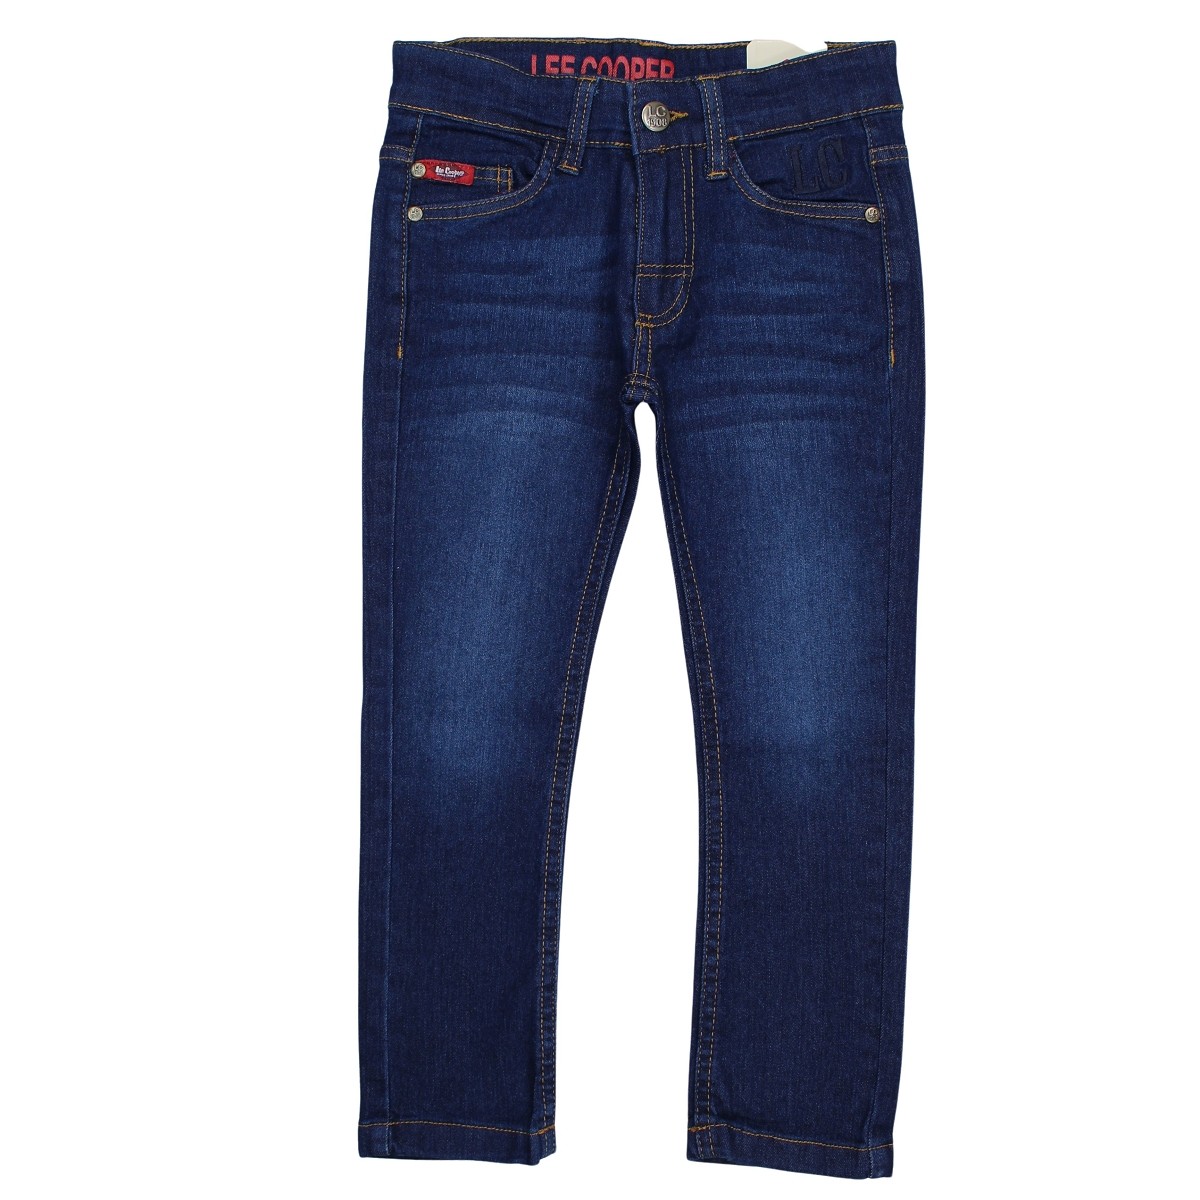 Buy Indigo Jeans for Men by LEE COOPER Online  Ajiocom